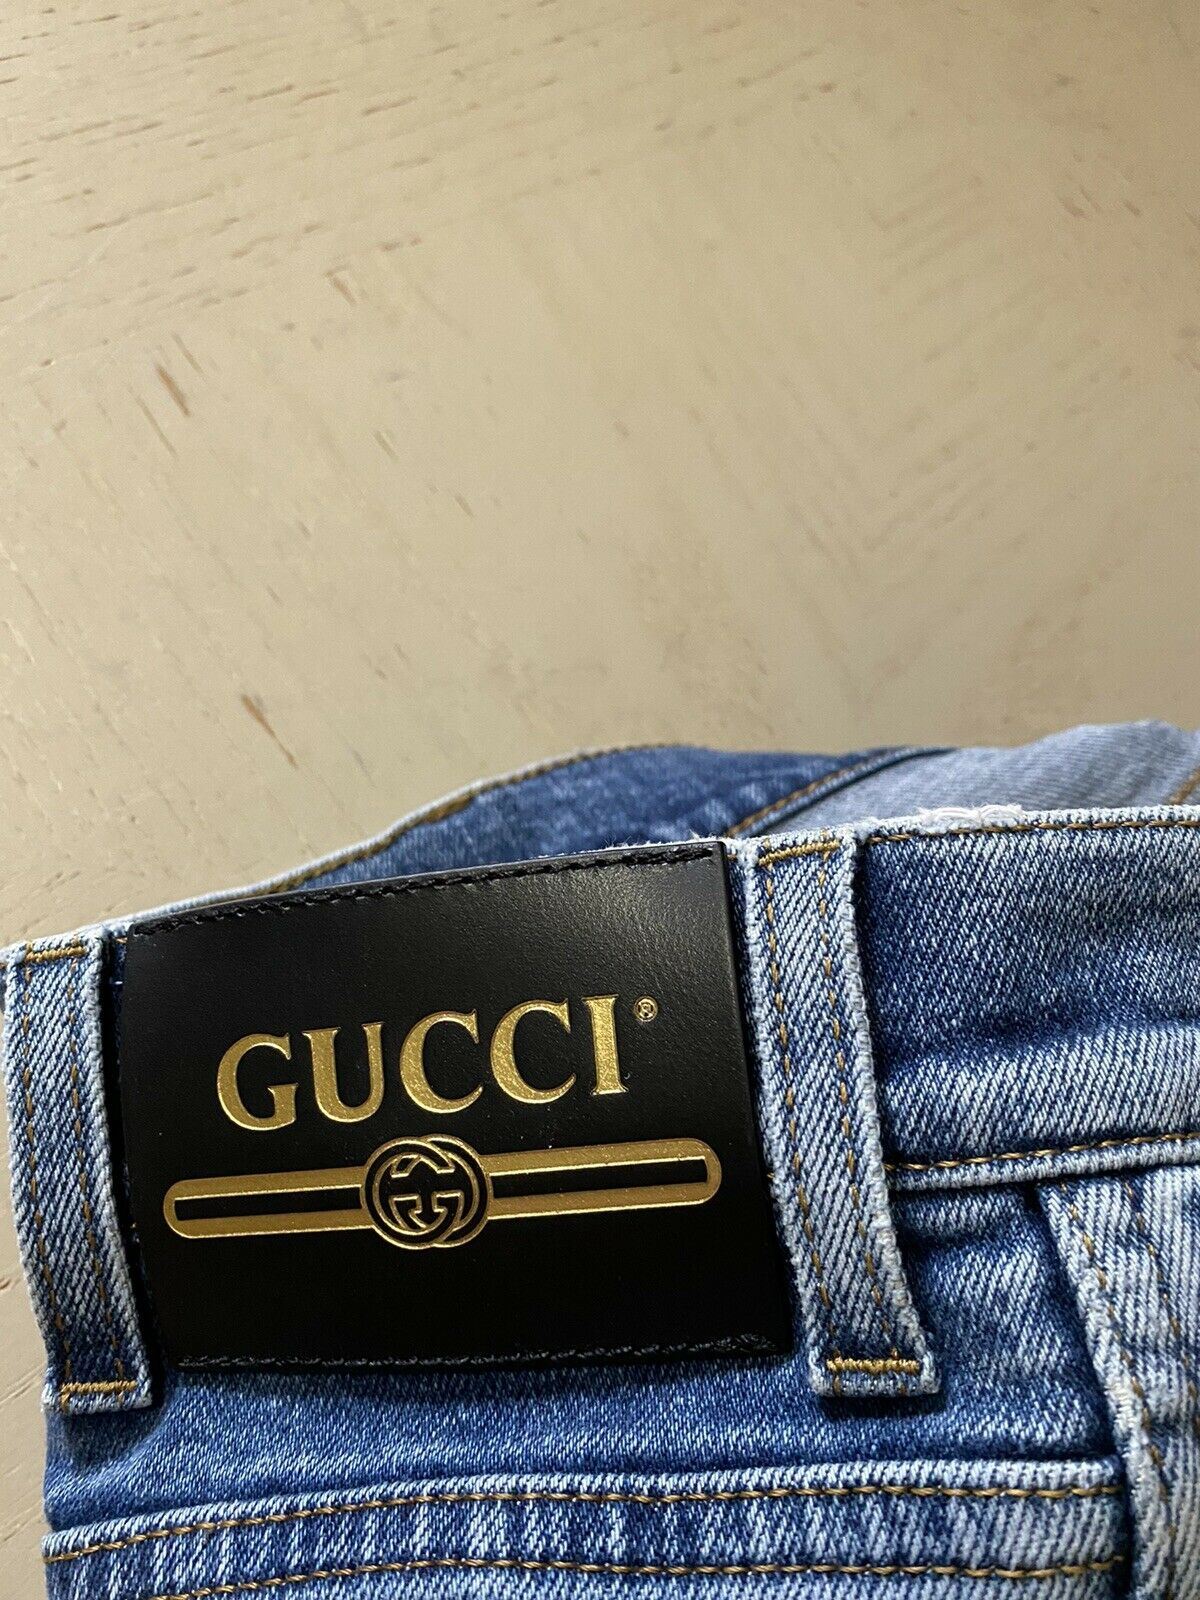 Neu mit Etikett: 1200 $ Gucci Herrenjeanshose Slim Fit Blau 36 US (52 Euro) Italien